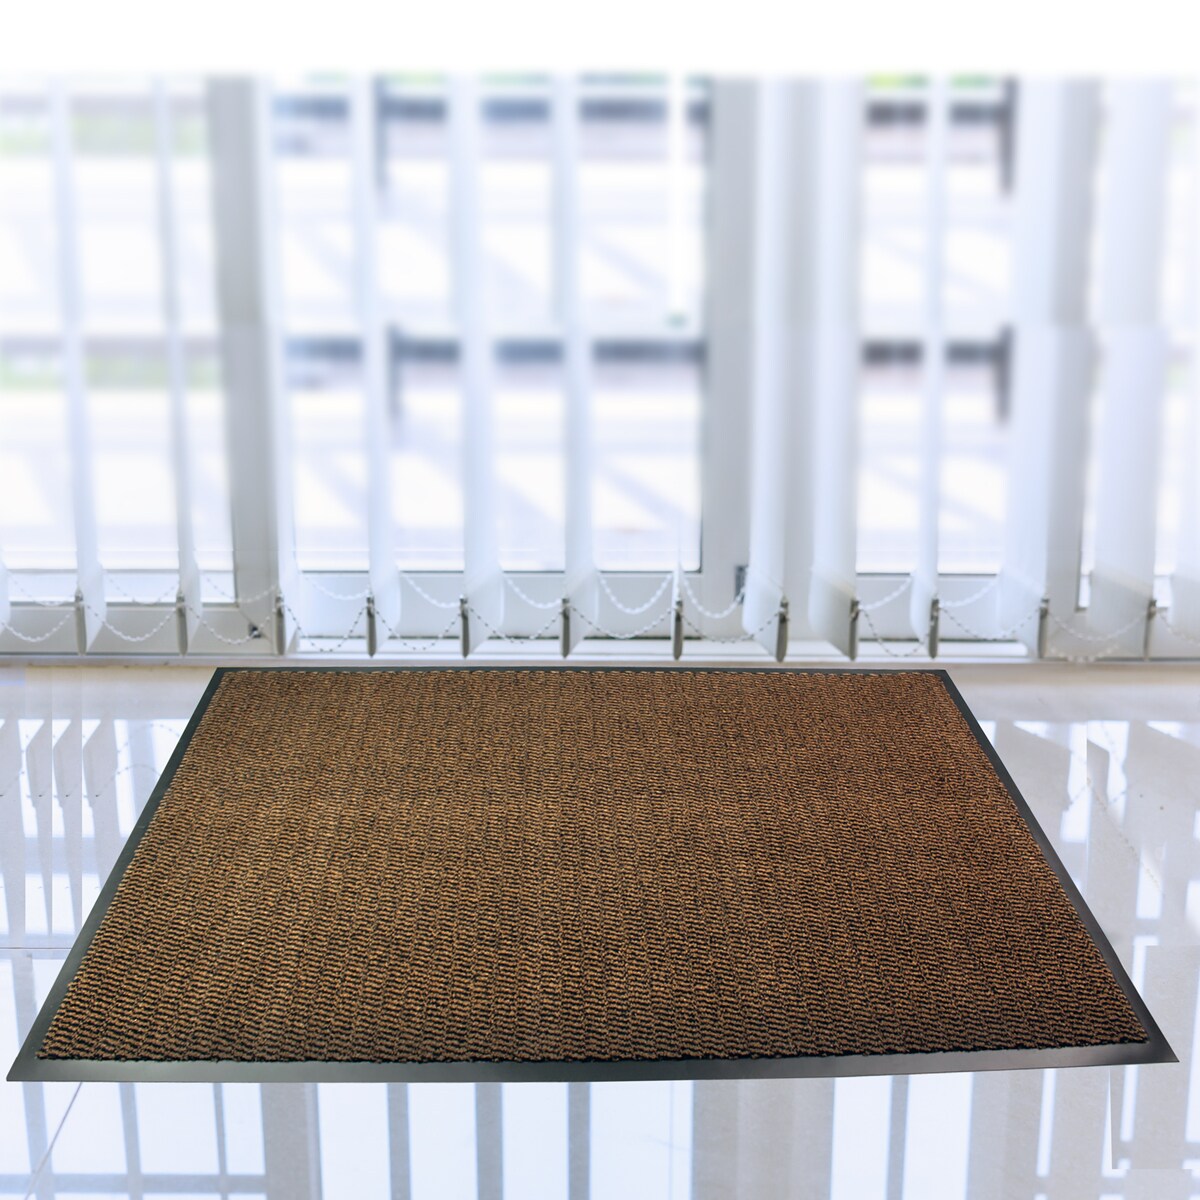 Interior Engineered Anti-Wear Floor Mat: Welcome Mat Size - 4' x 6